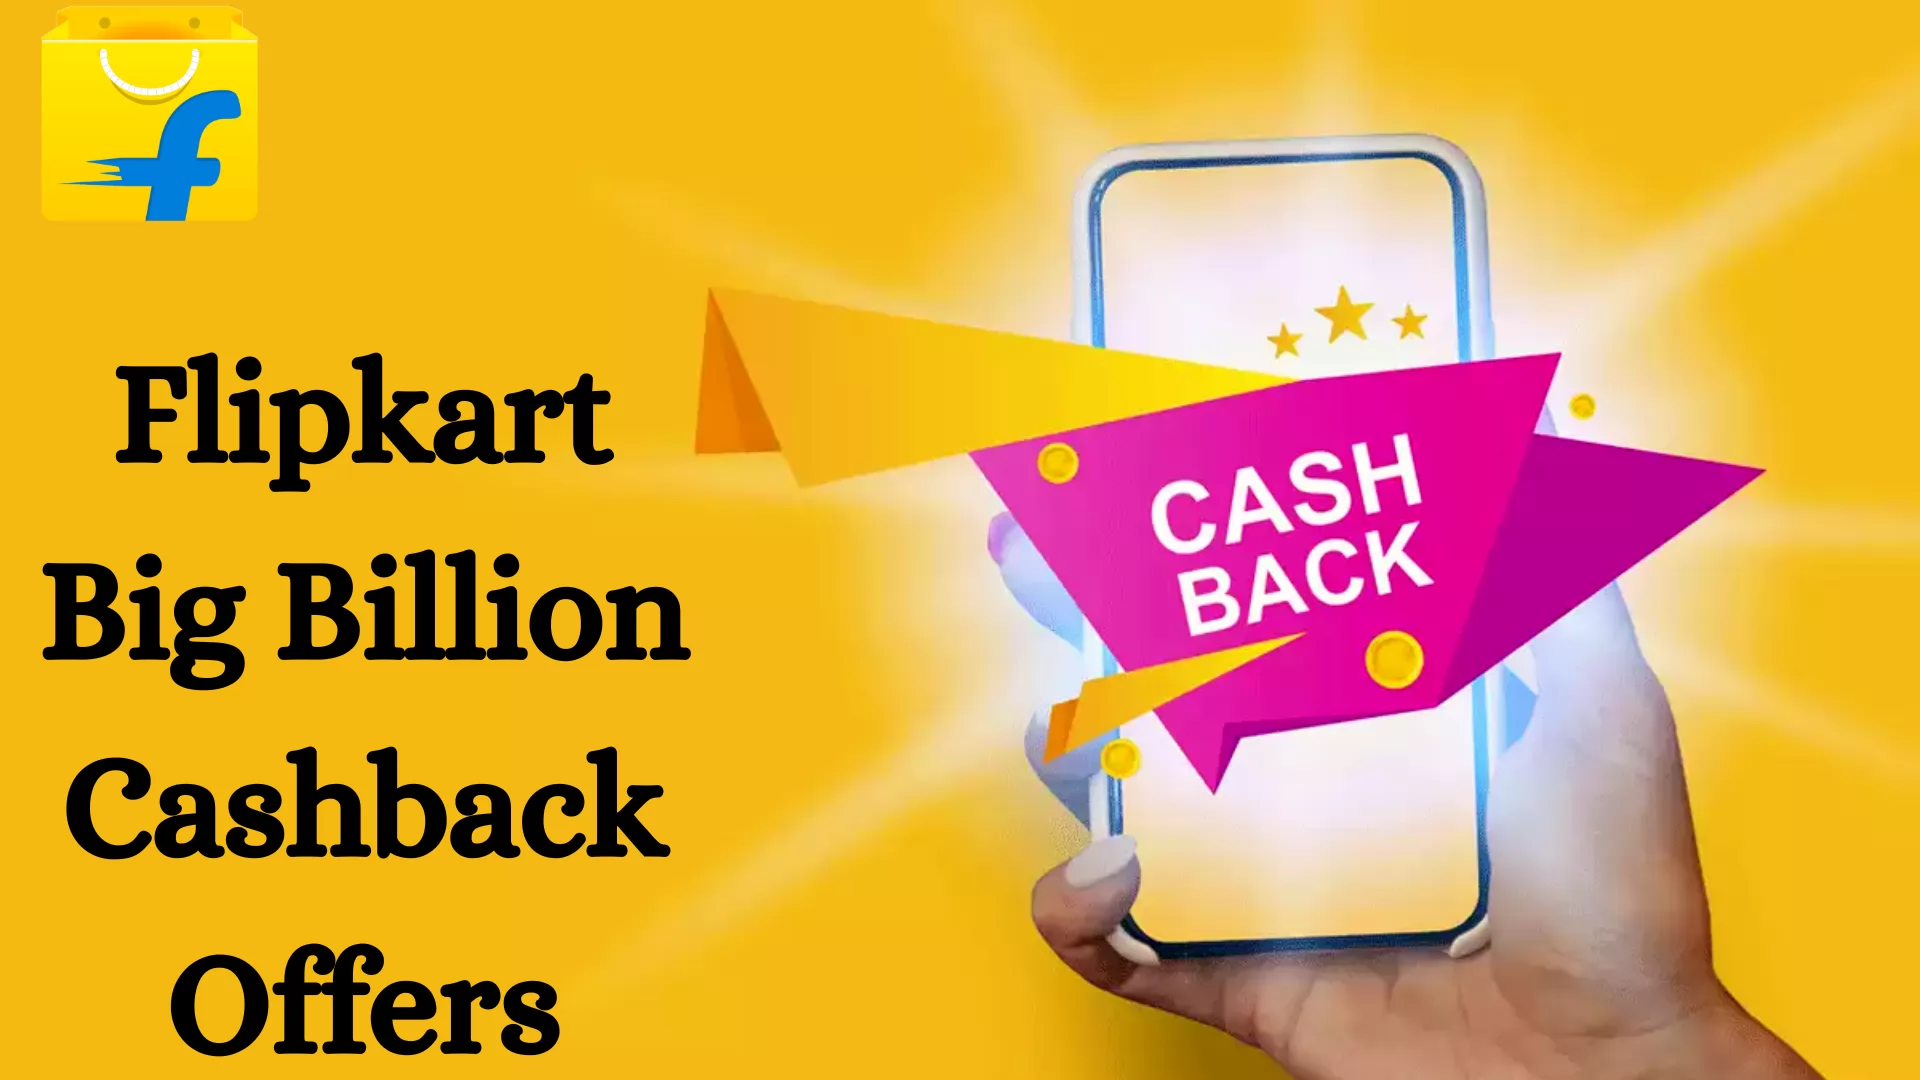 Flipkart Big Billion Cashback Offers